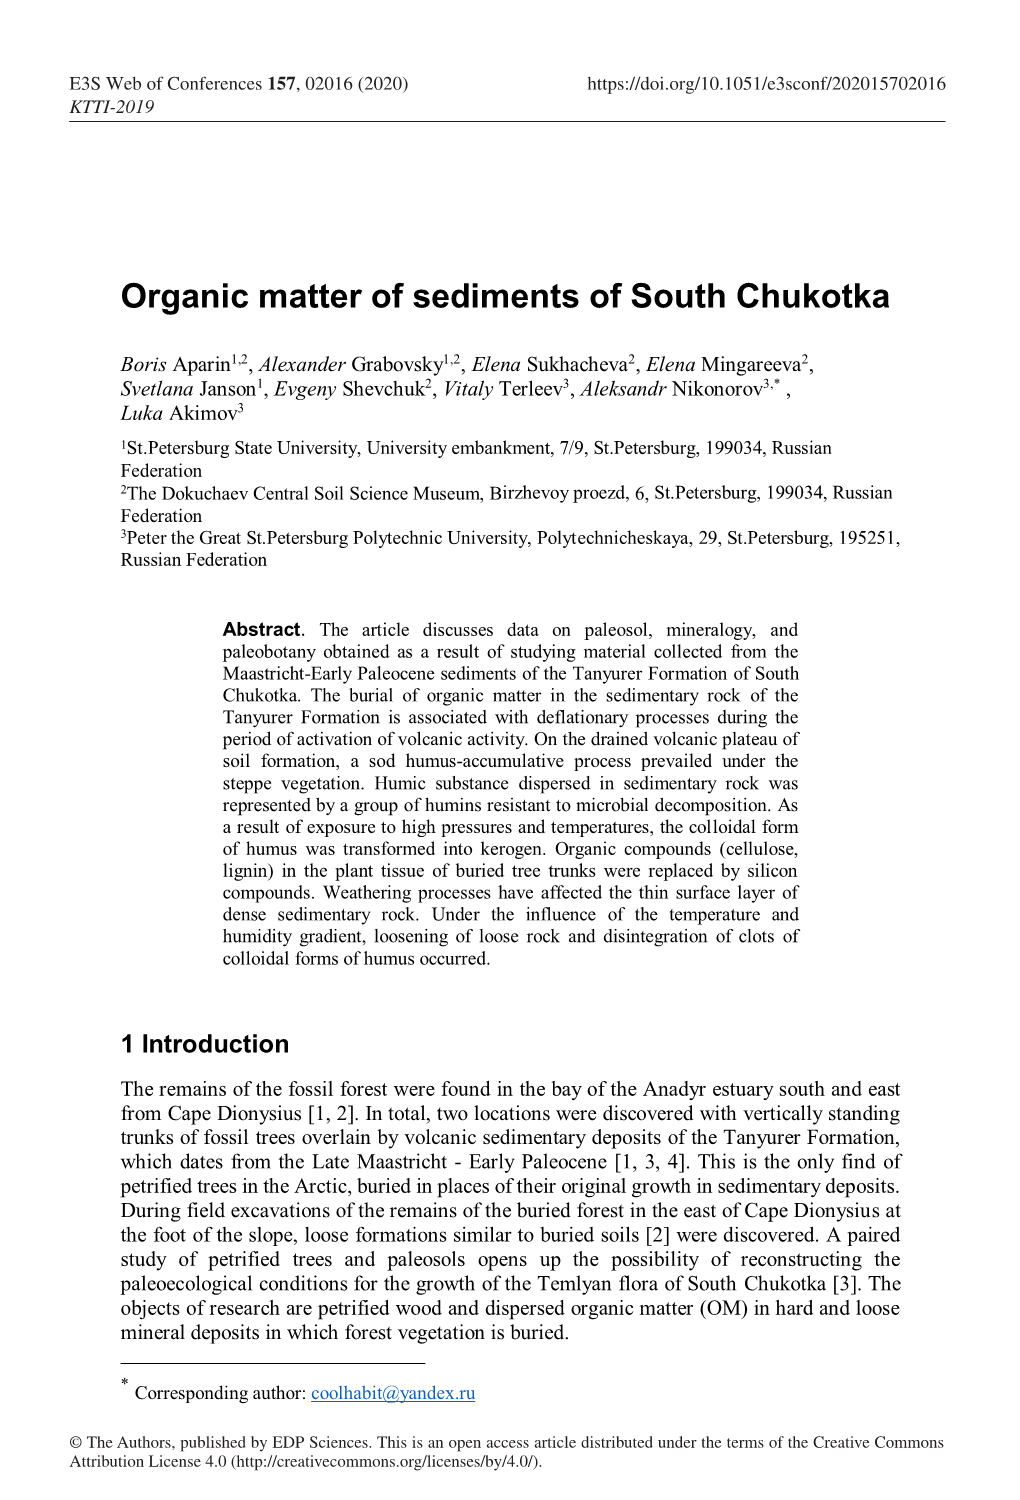 Organic Matter of Sediments of South Chukotka